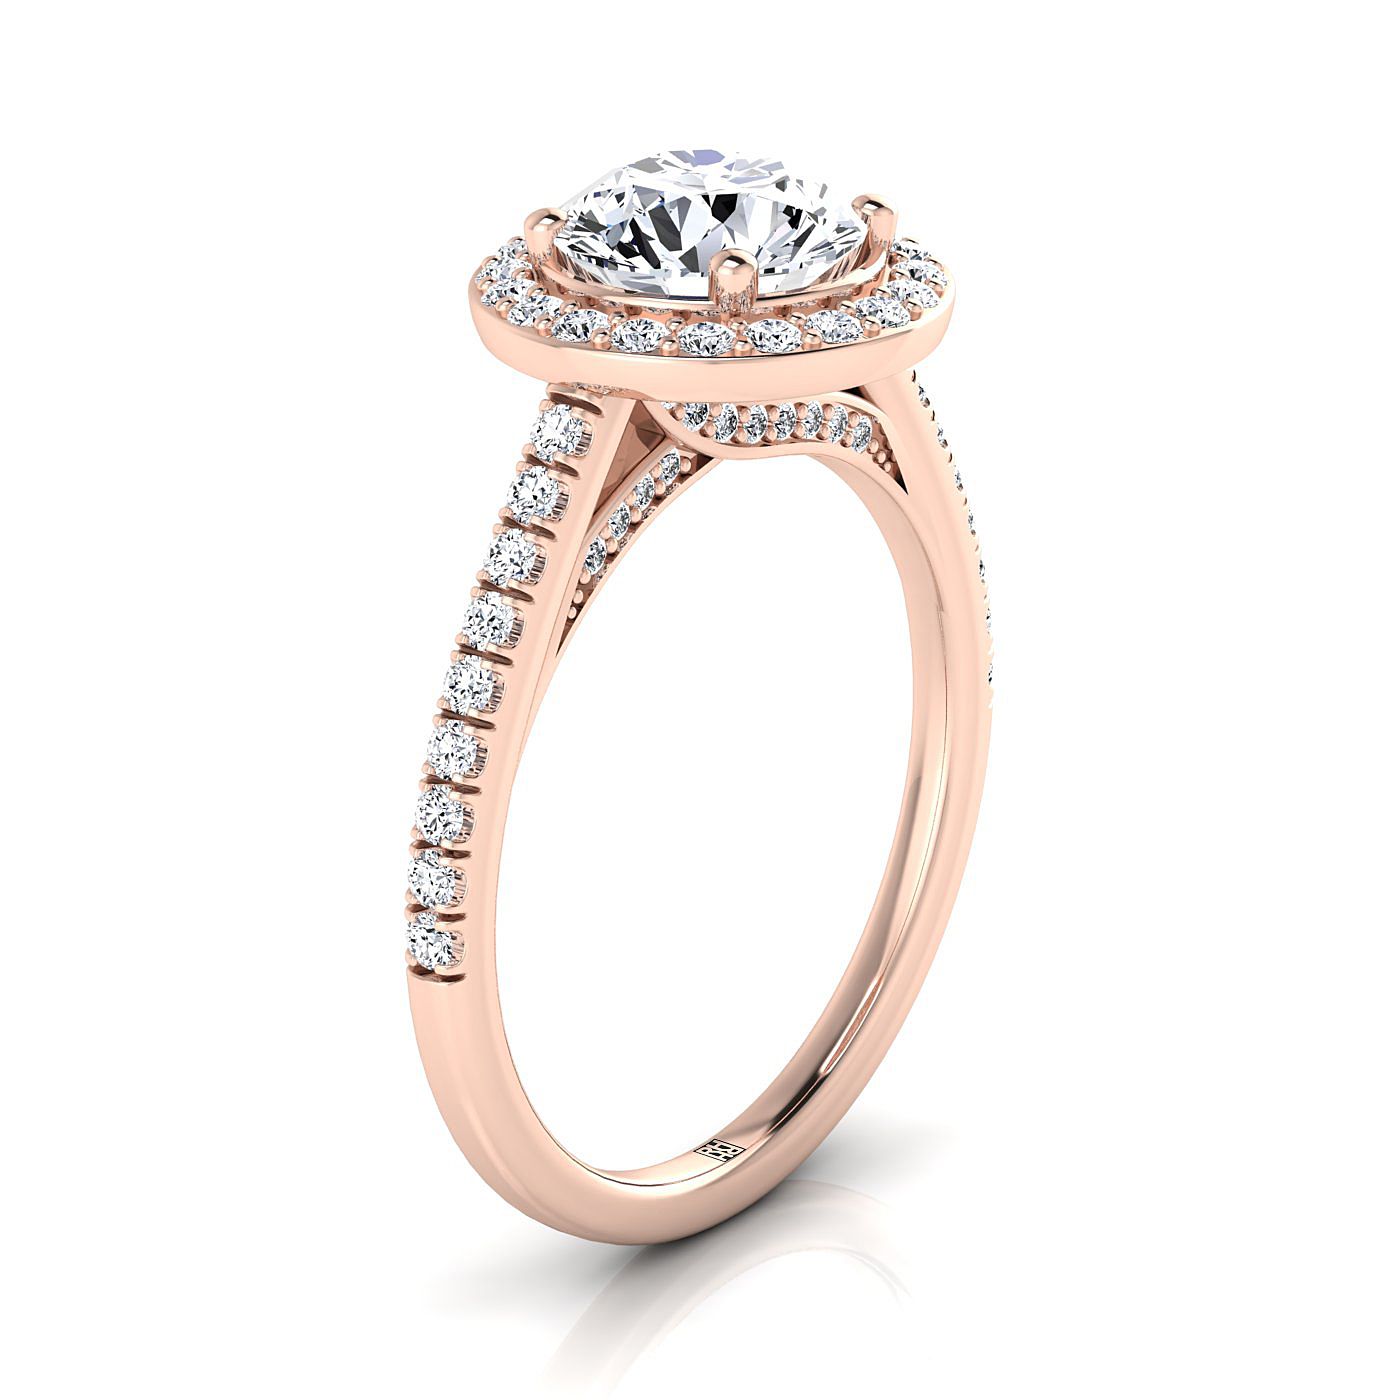 14K Rose Gold Round Brilliant Aquamarine French Pave Halo Secret Gallery Diamond Engagement Ring -3/8ctw